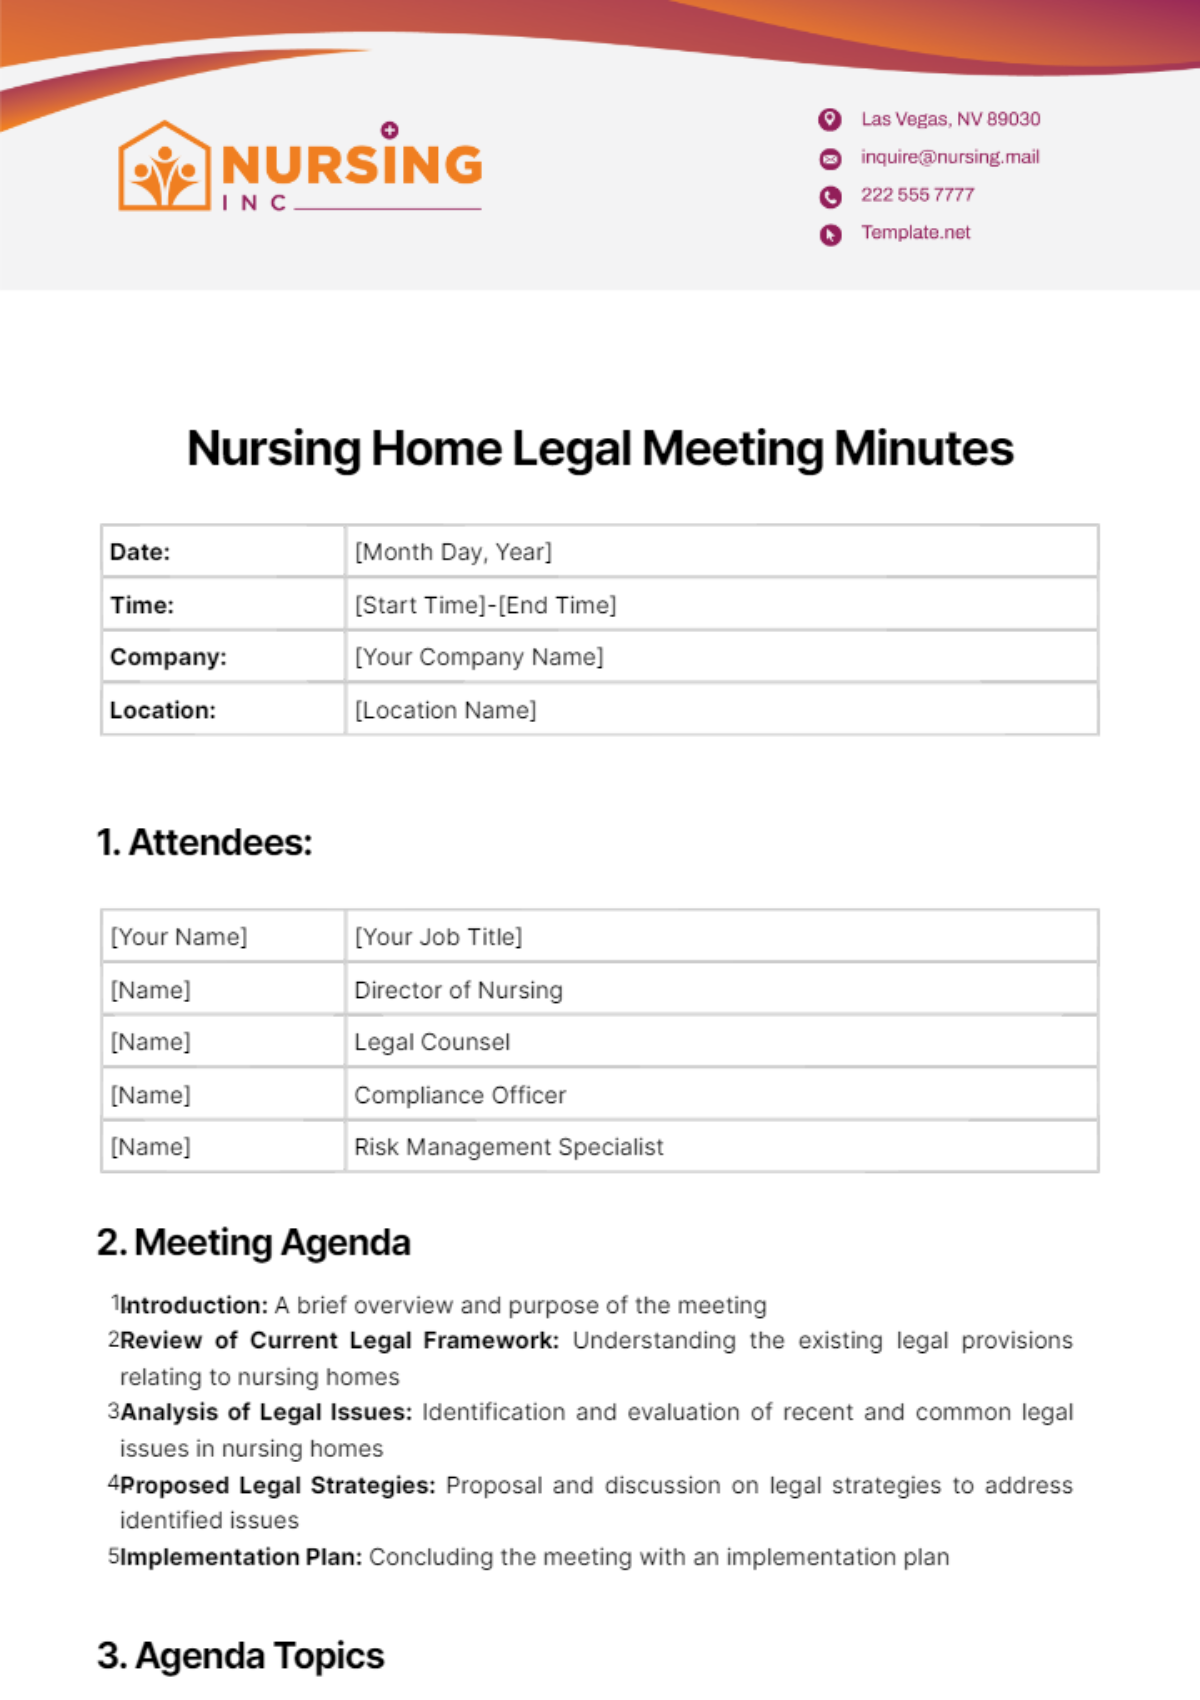 Nursing Home Legal Meeting Minutes Template